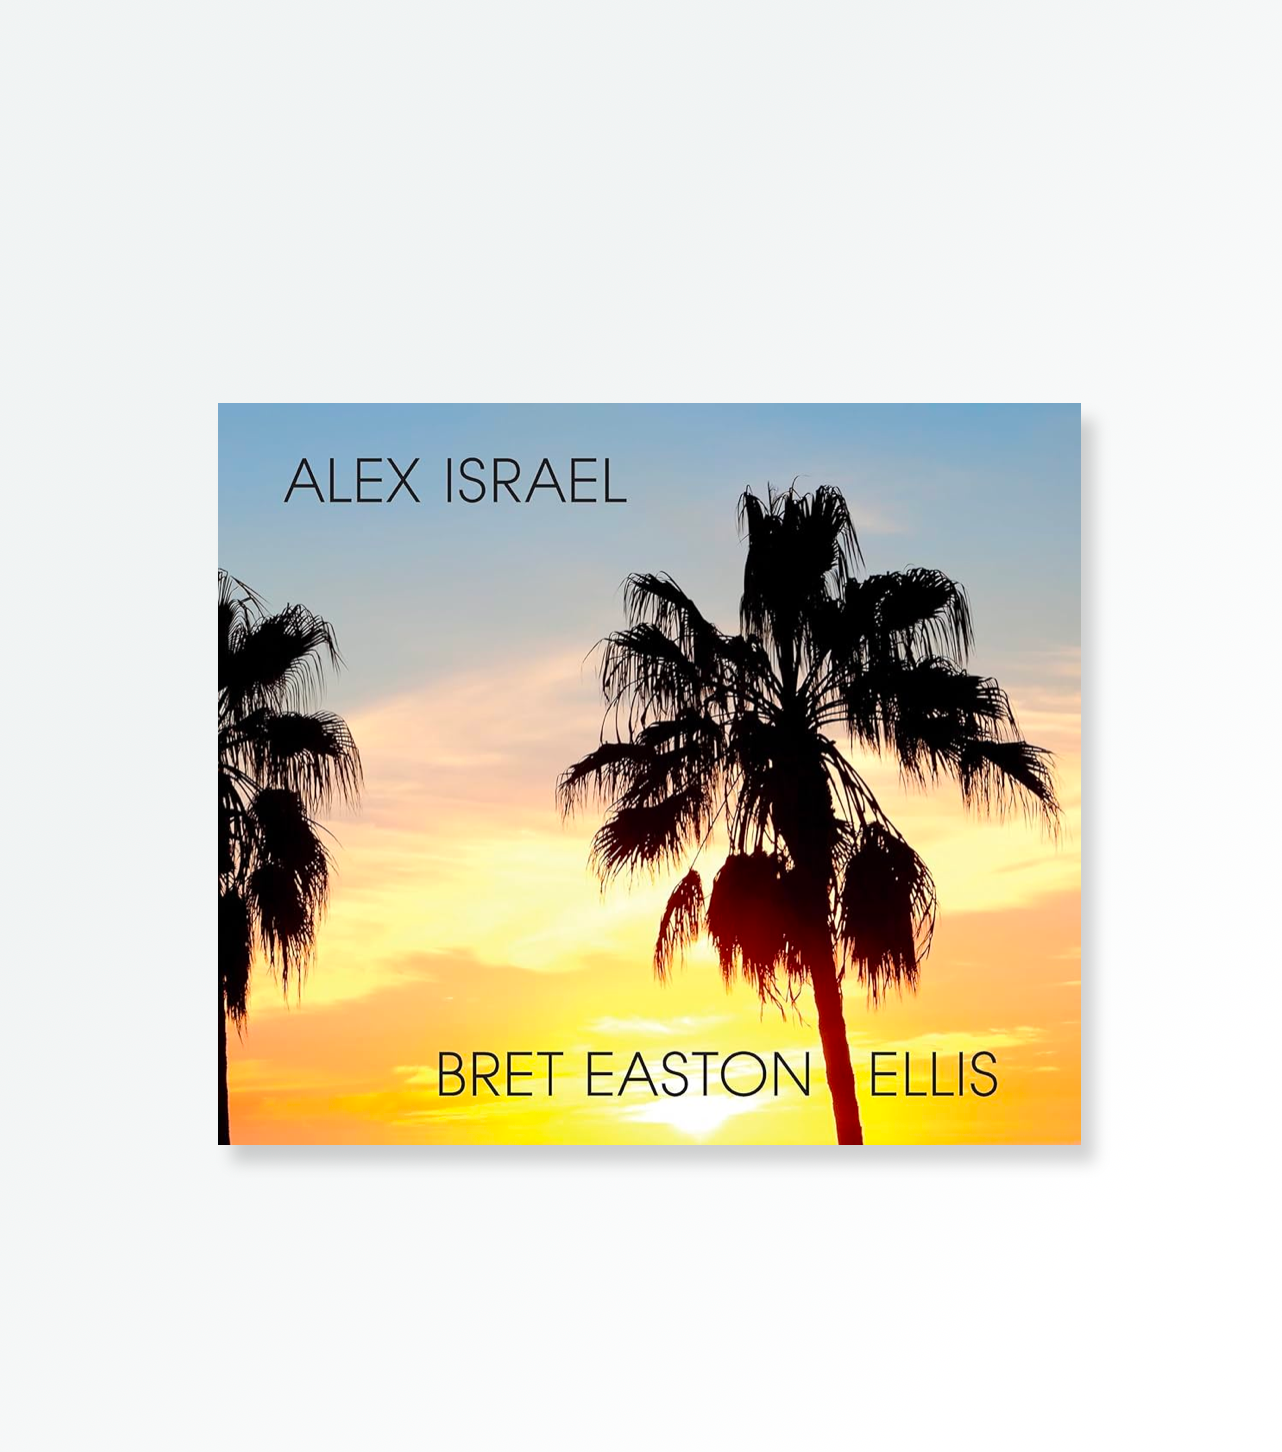 Alex Israel & Bret Easton Ellis